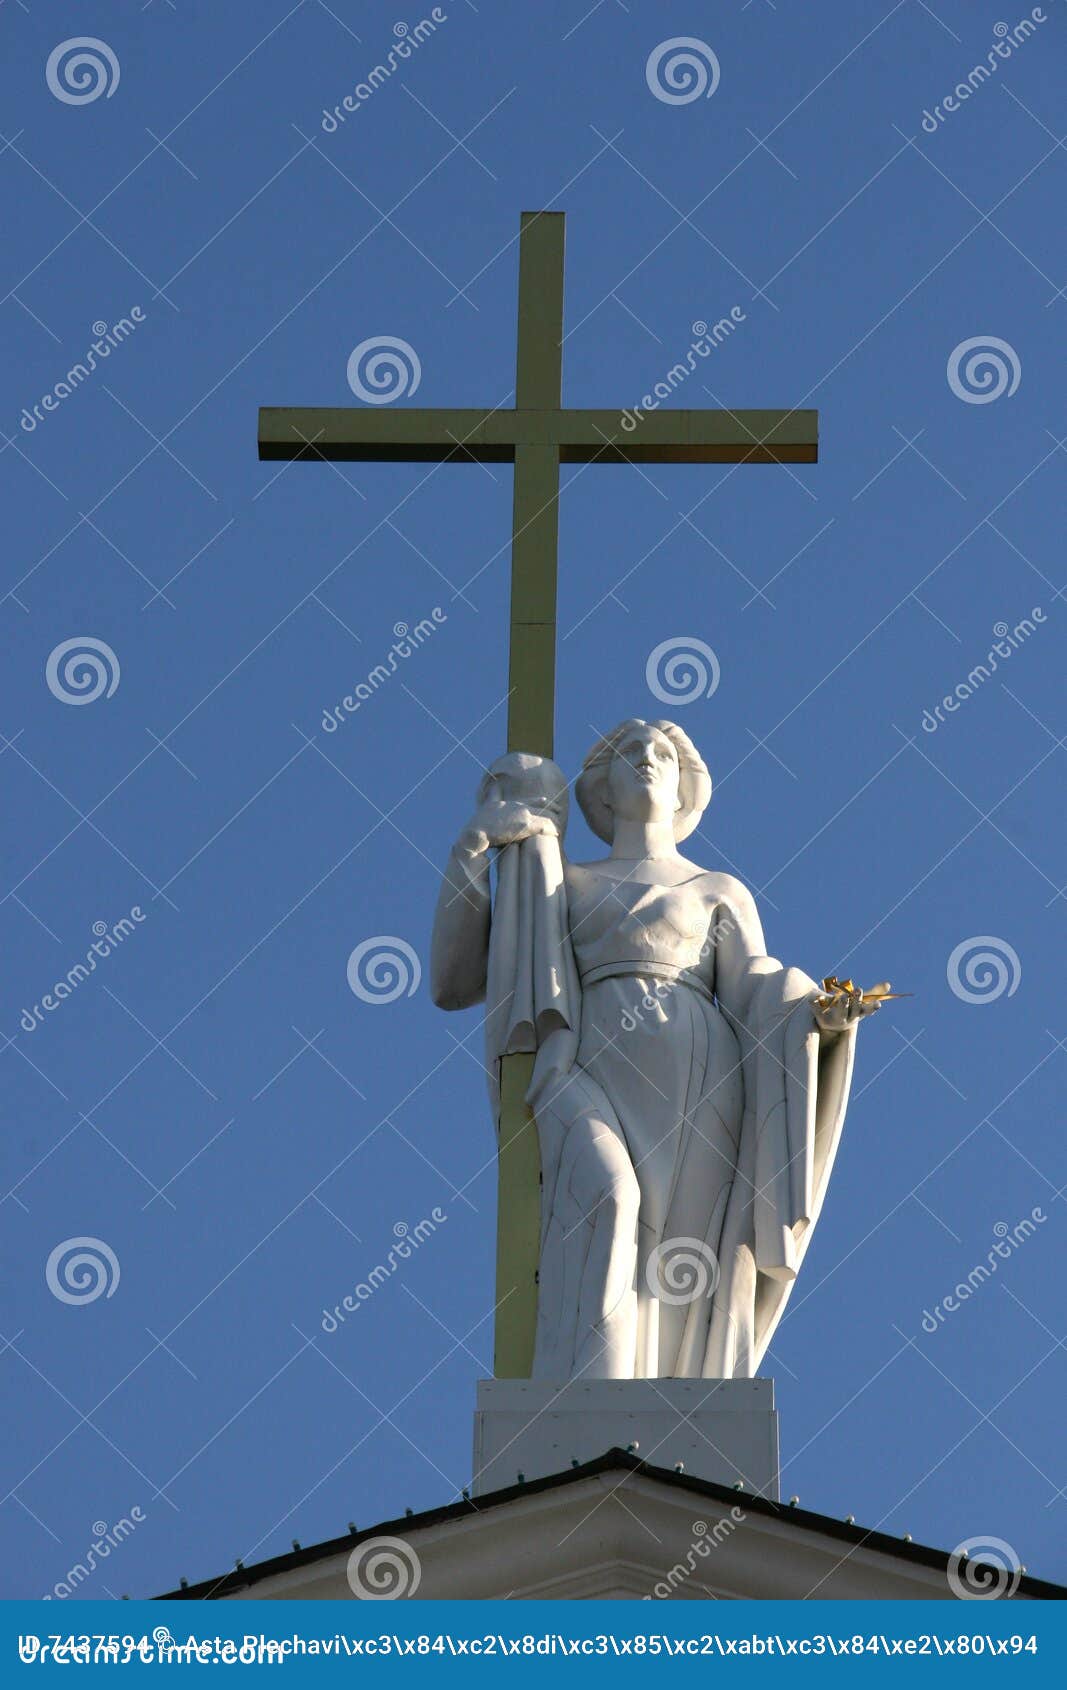 saint helena with golden cross